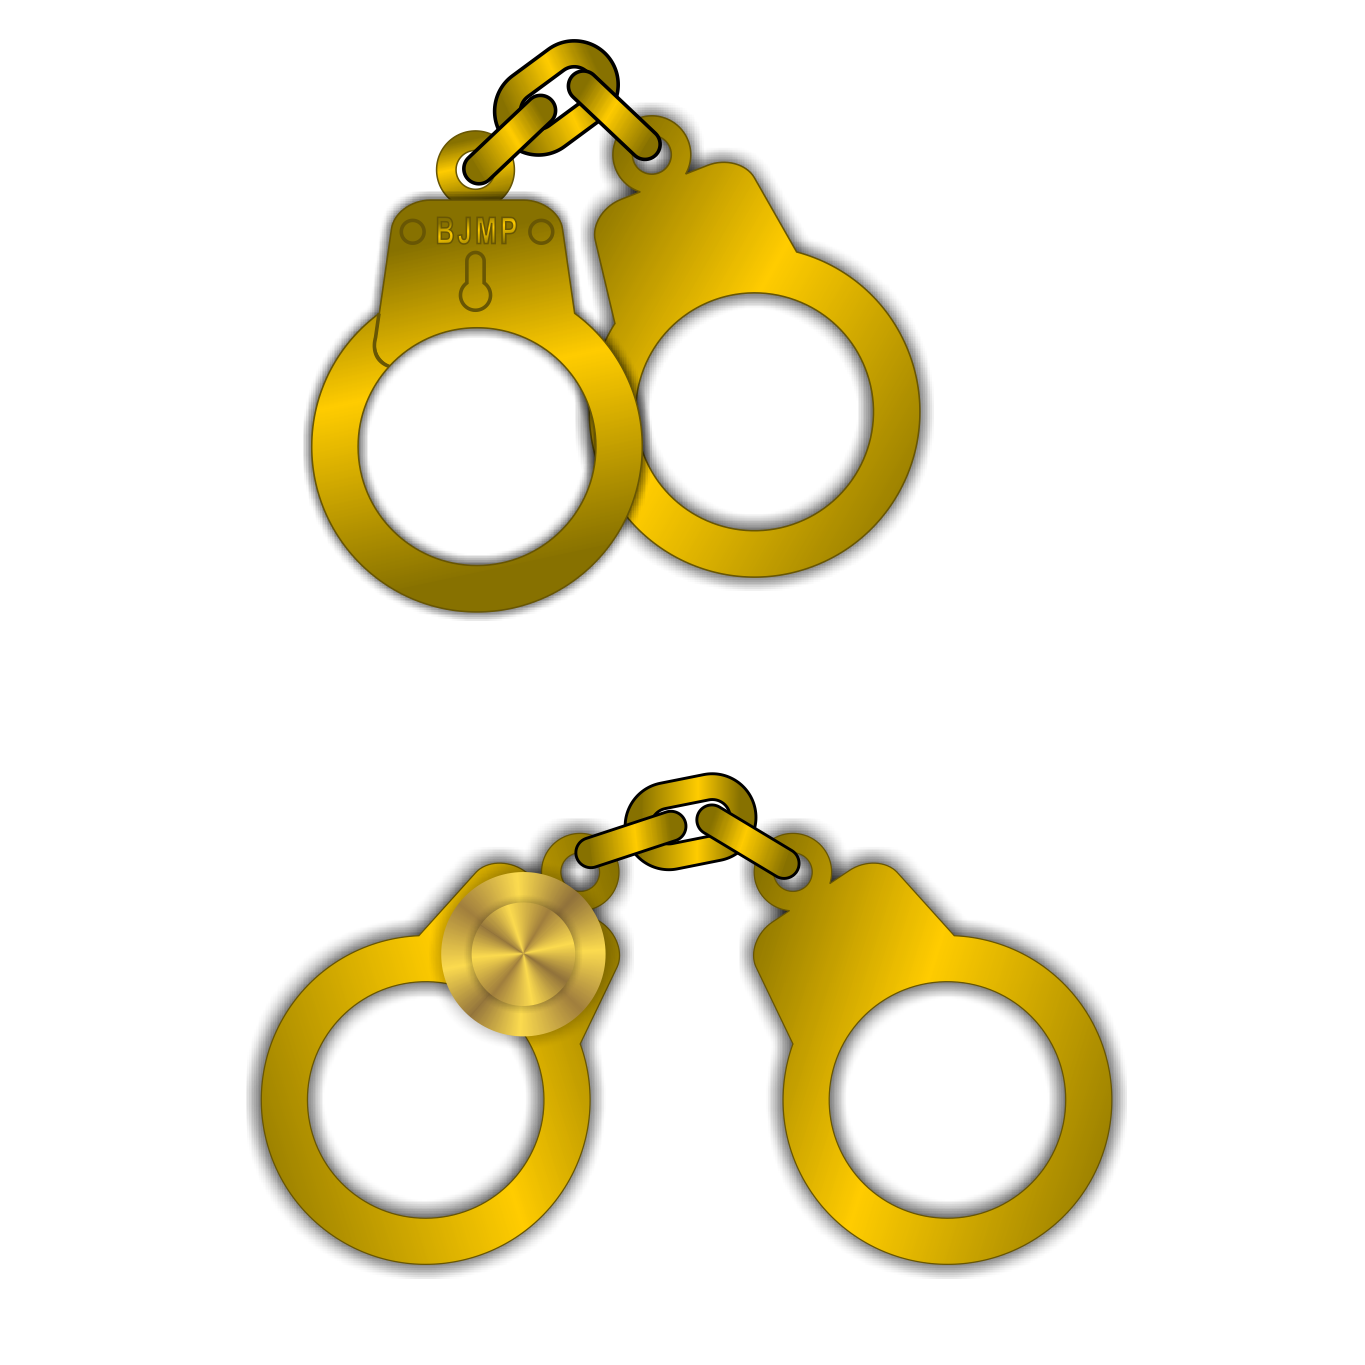 Bureau of Jail Mnagement and Penology (BJMP) Handcuff Pin - BJMP